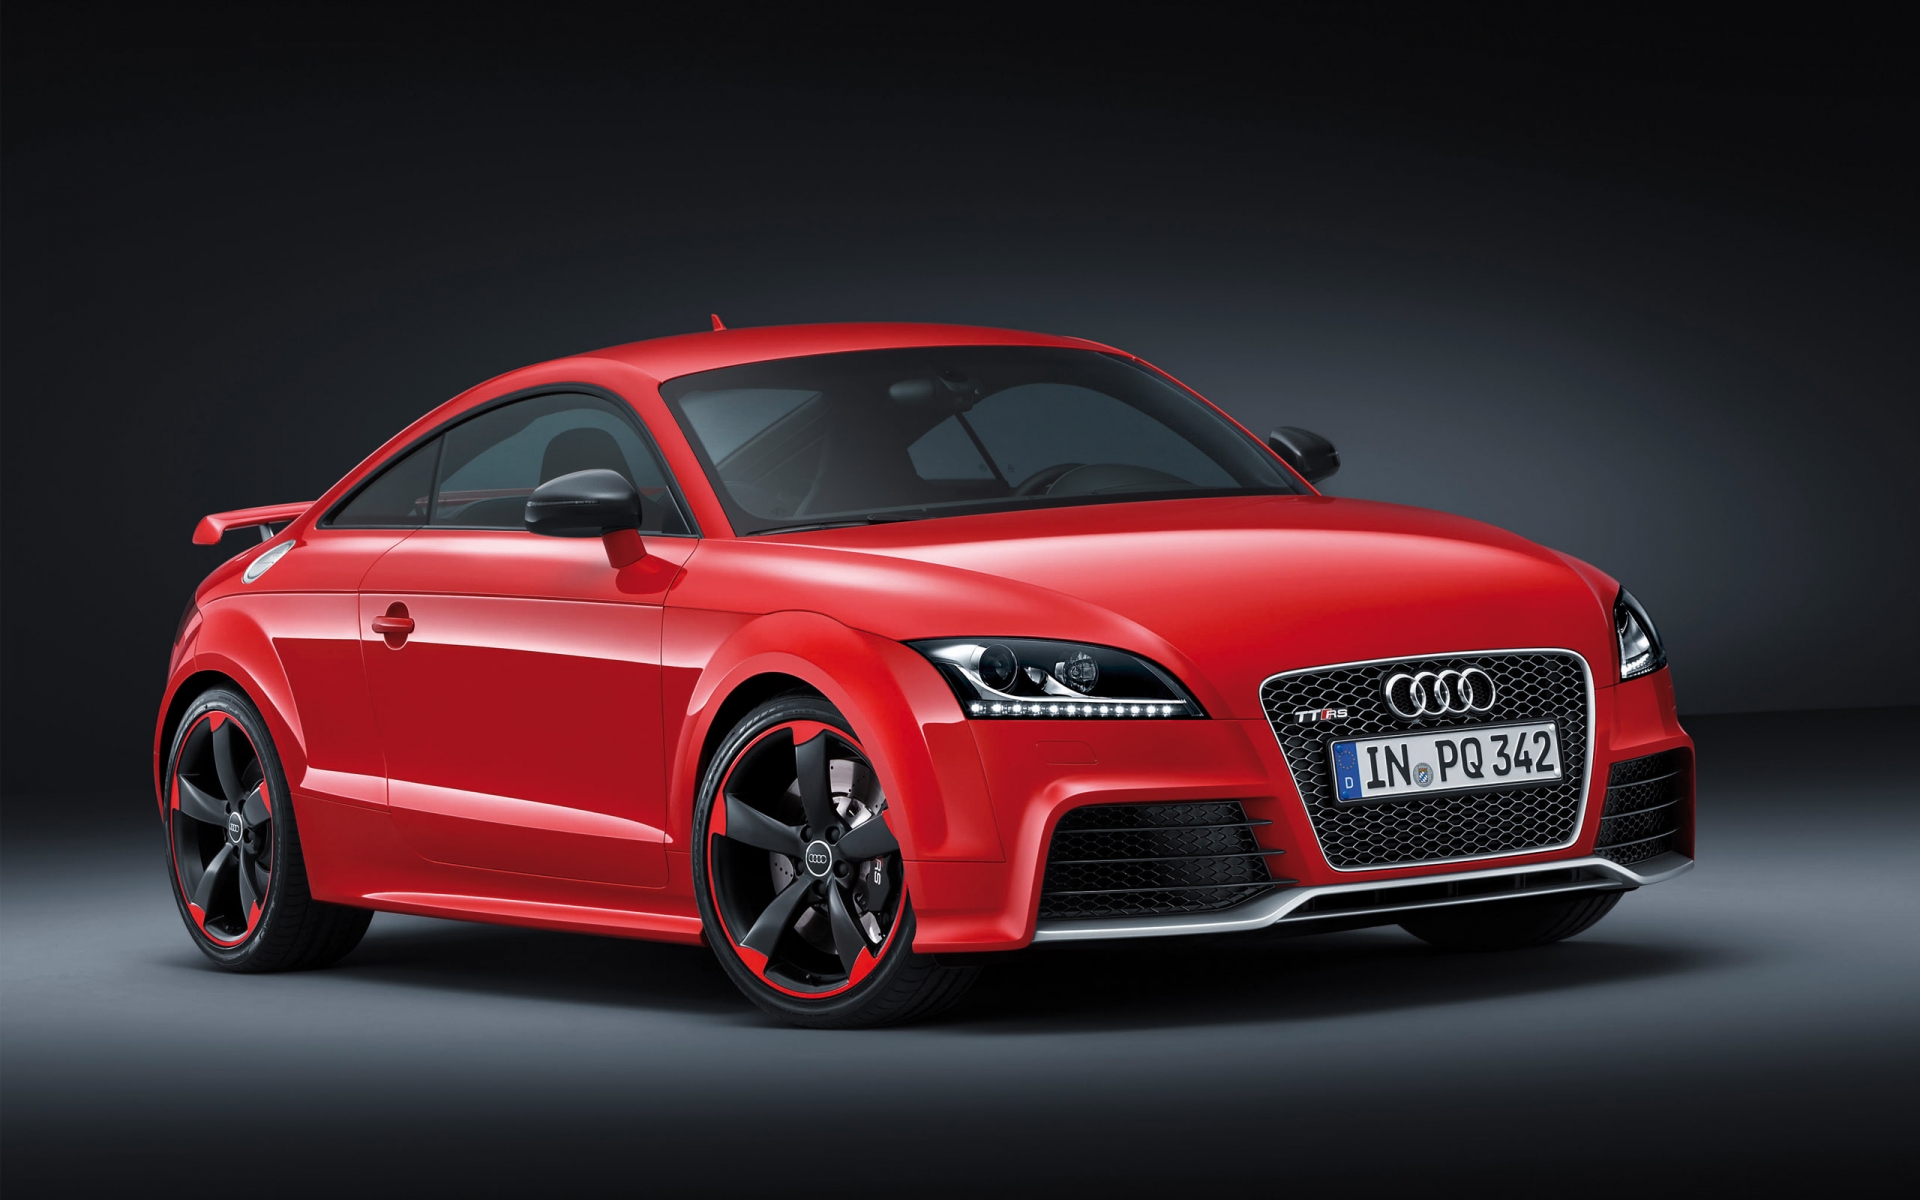 Audi Tt Rs Plus Wallpaper S High Resolution Image For